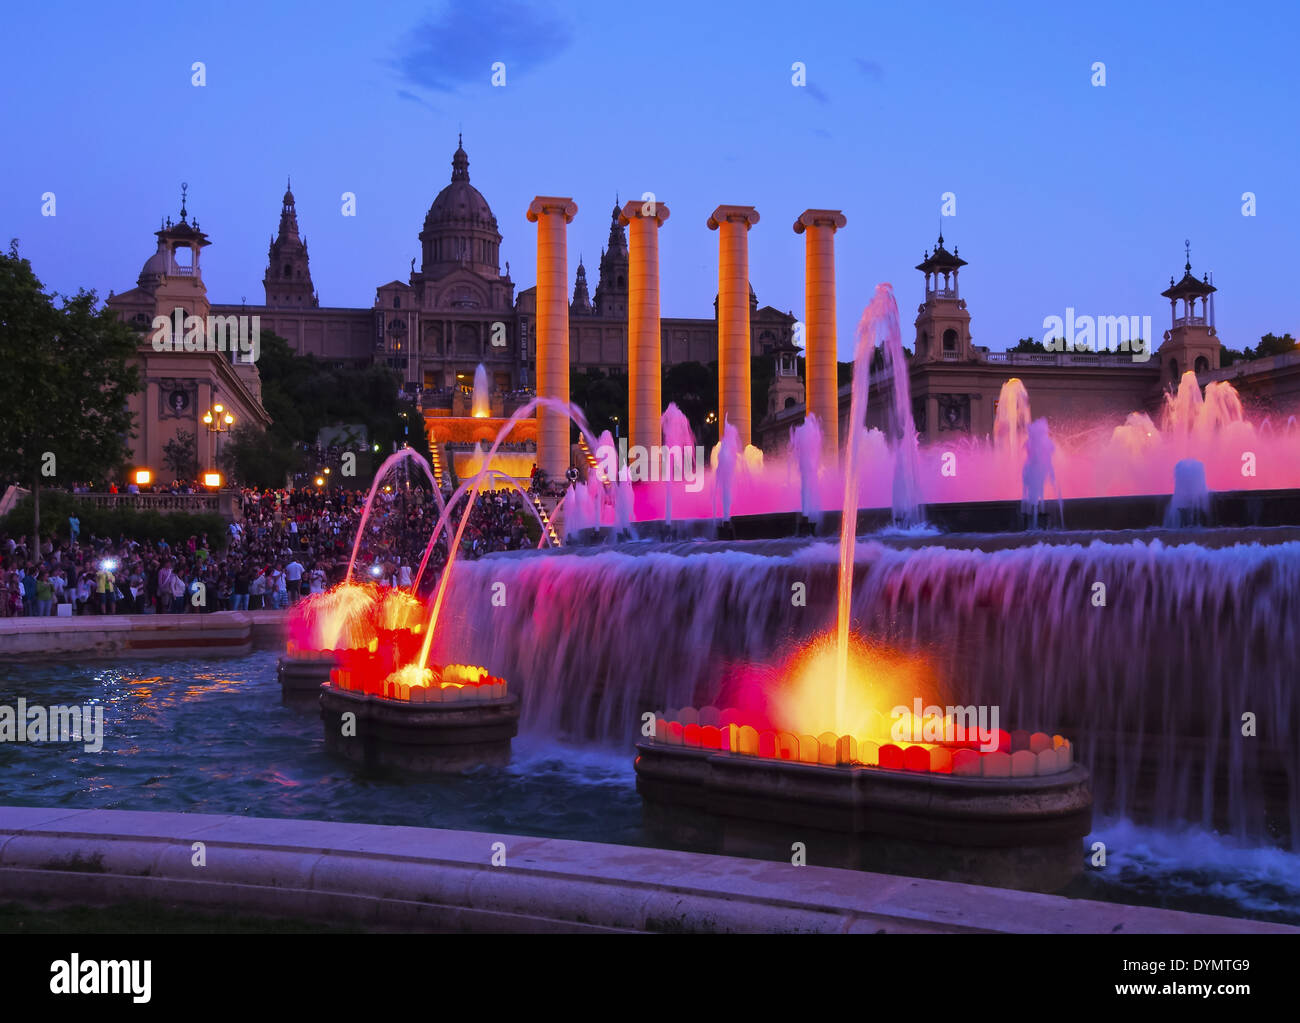 Font Magica de Montjuic - famous fountains in Barcelona, Catalonia, Spain Stock Photo